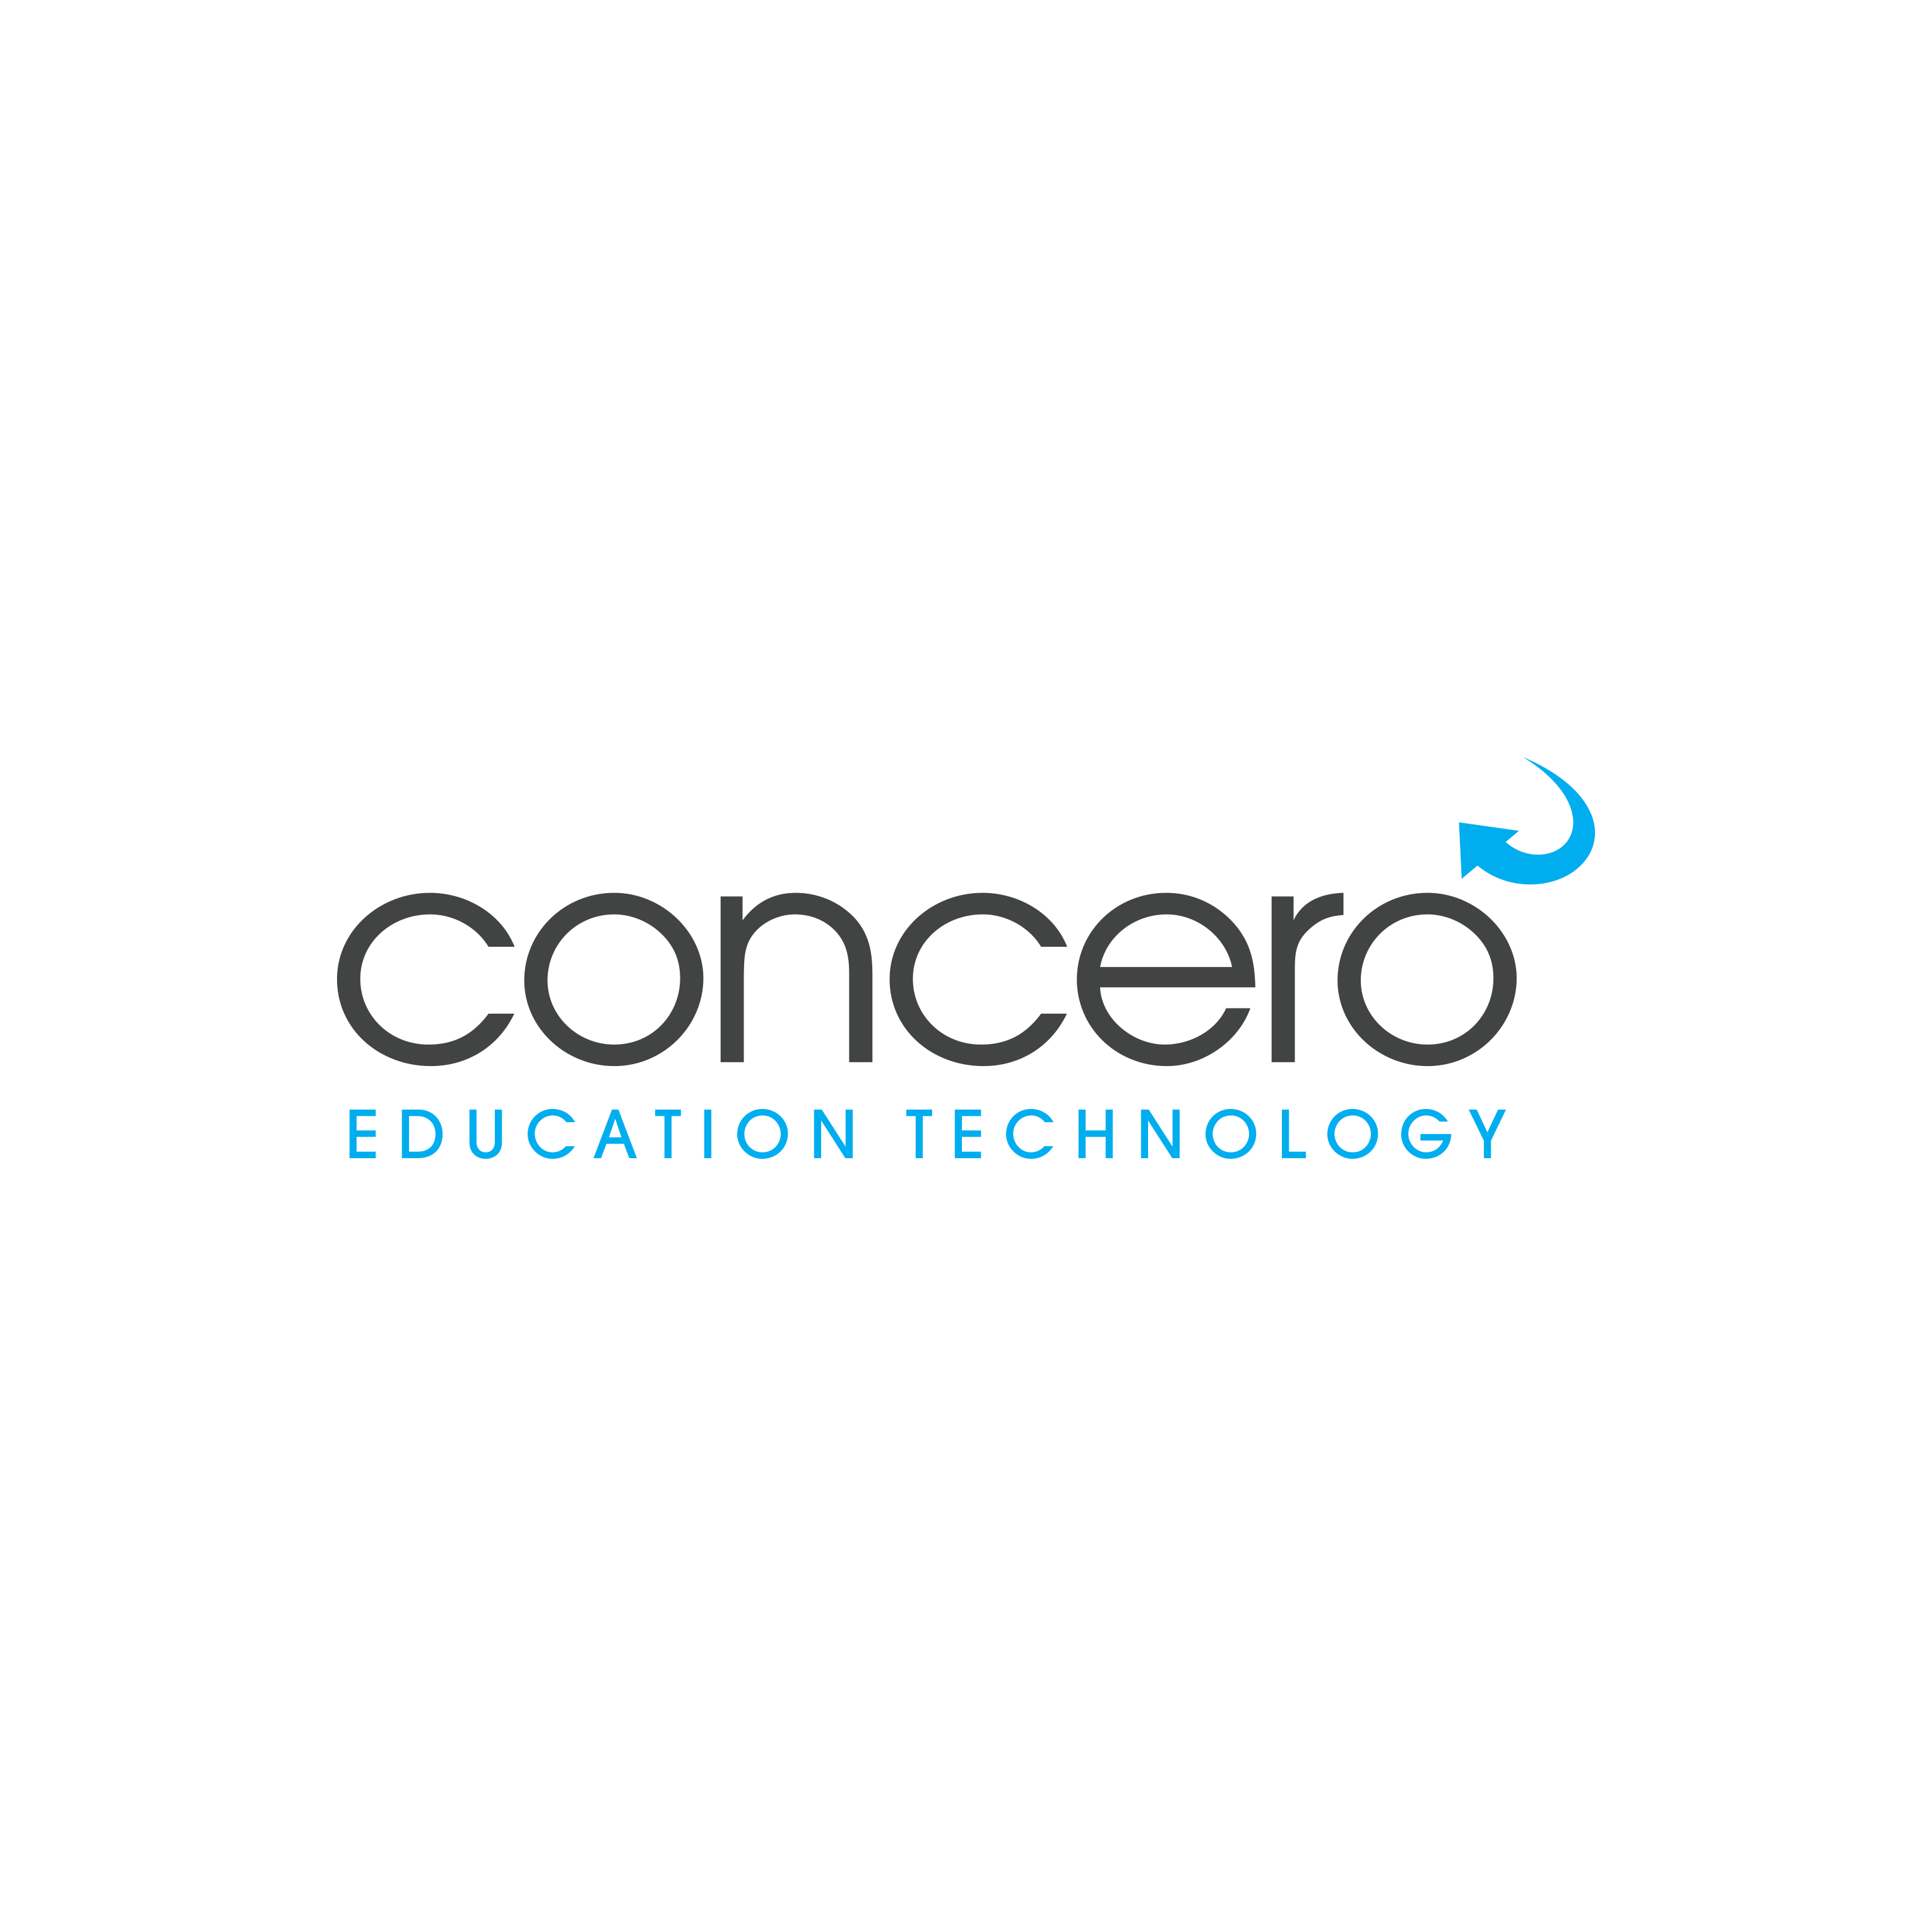 Concero Education Technology